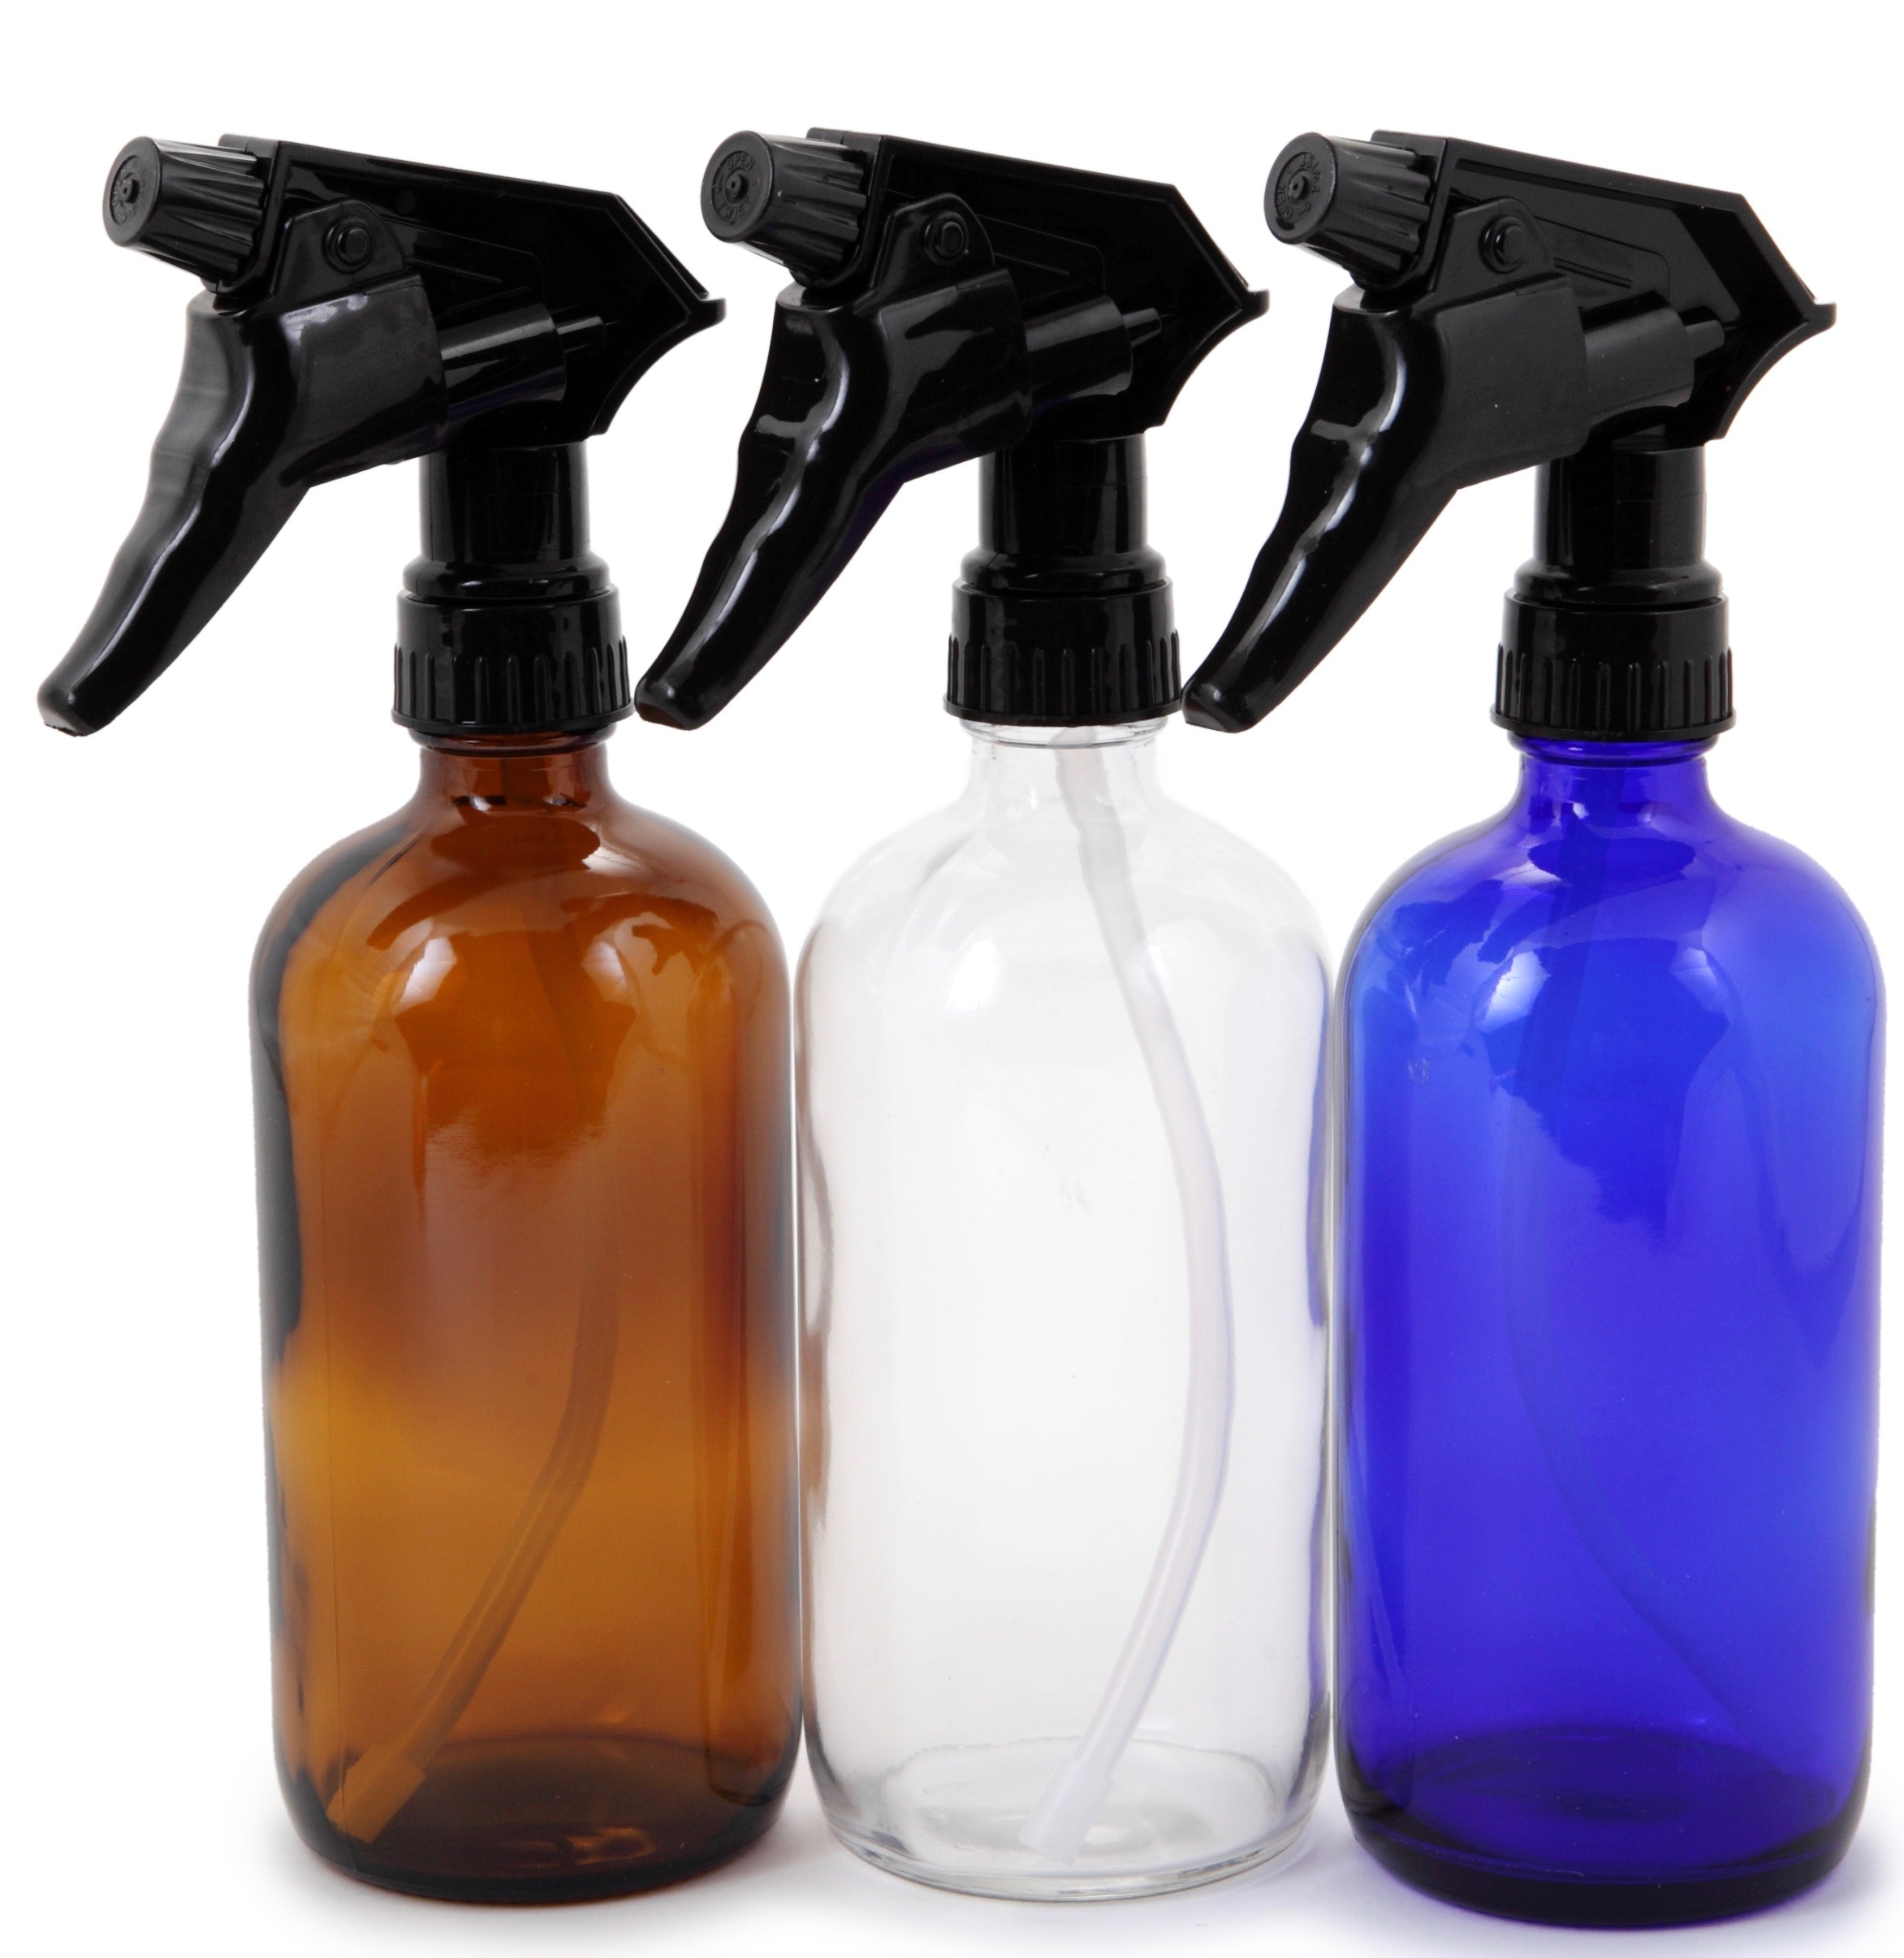 Empty 8 oz Large Amber Glass Spray Bottles with Black Trigger Sprayers 6 Vivaplex